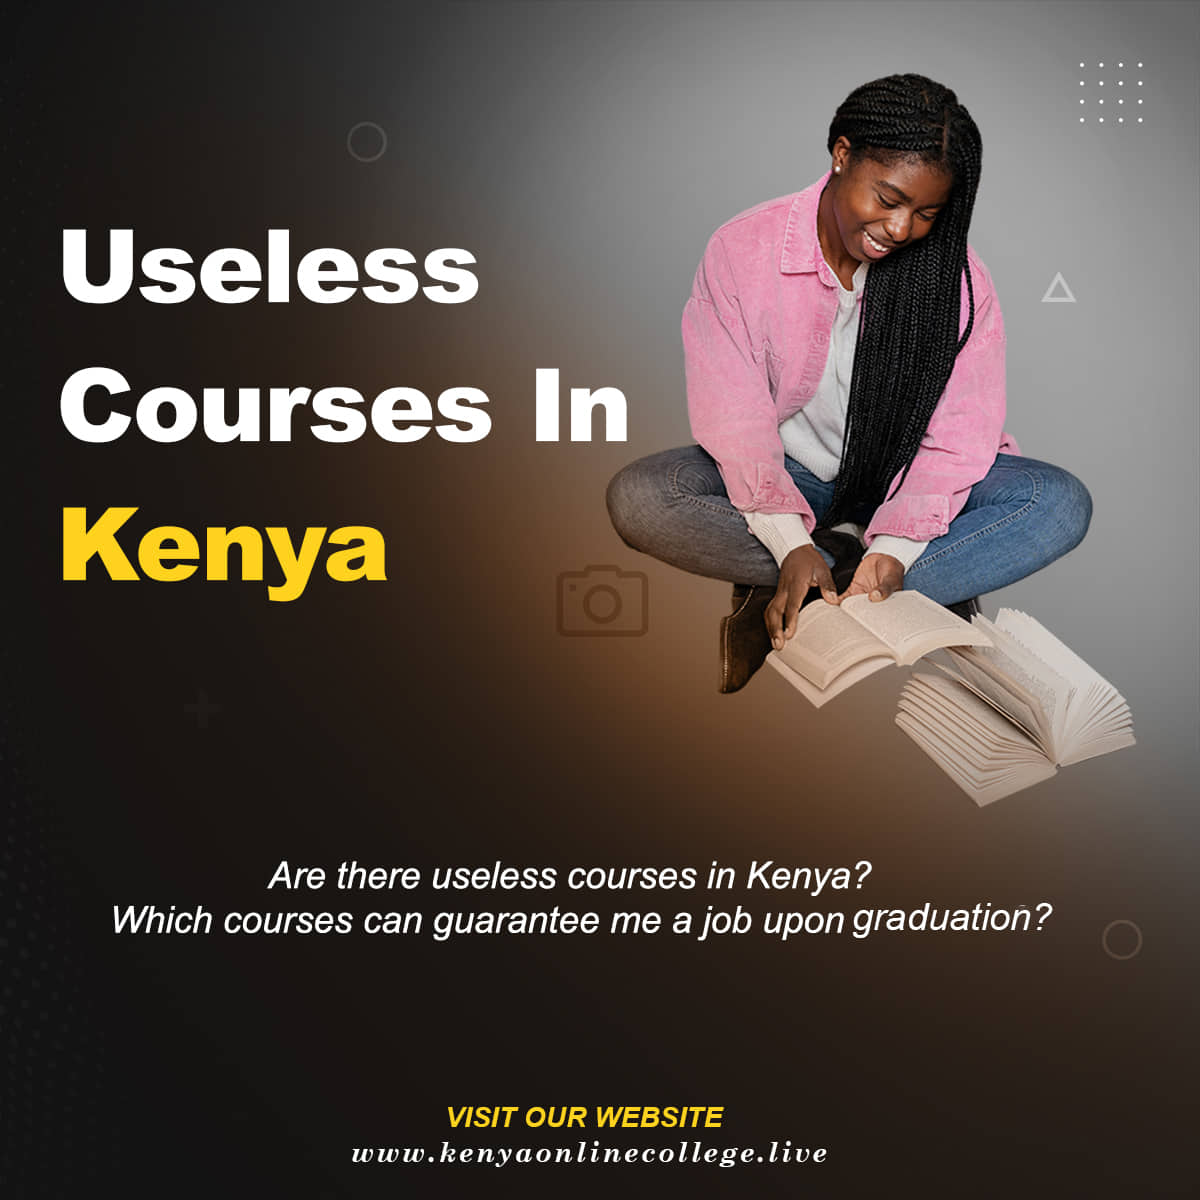 useless courses in Kenya